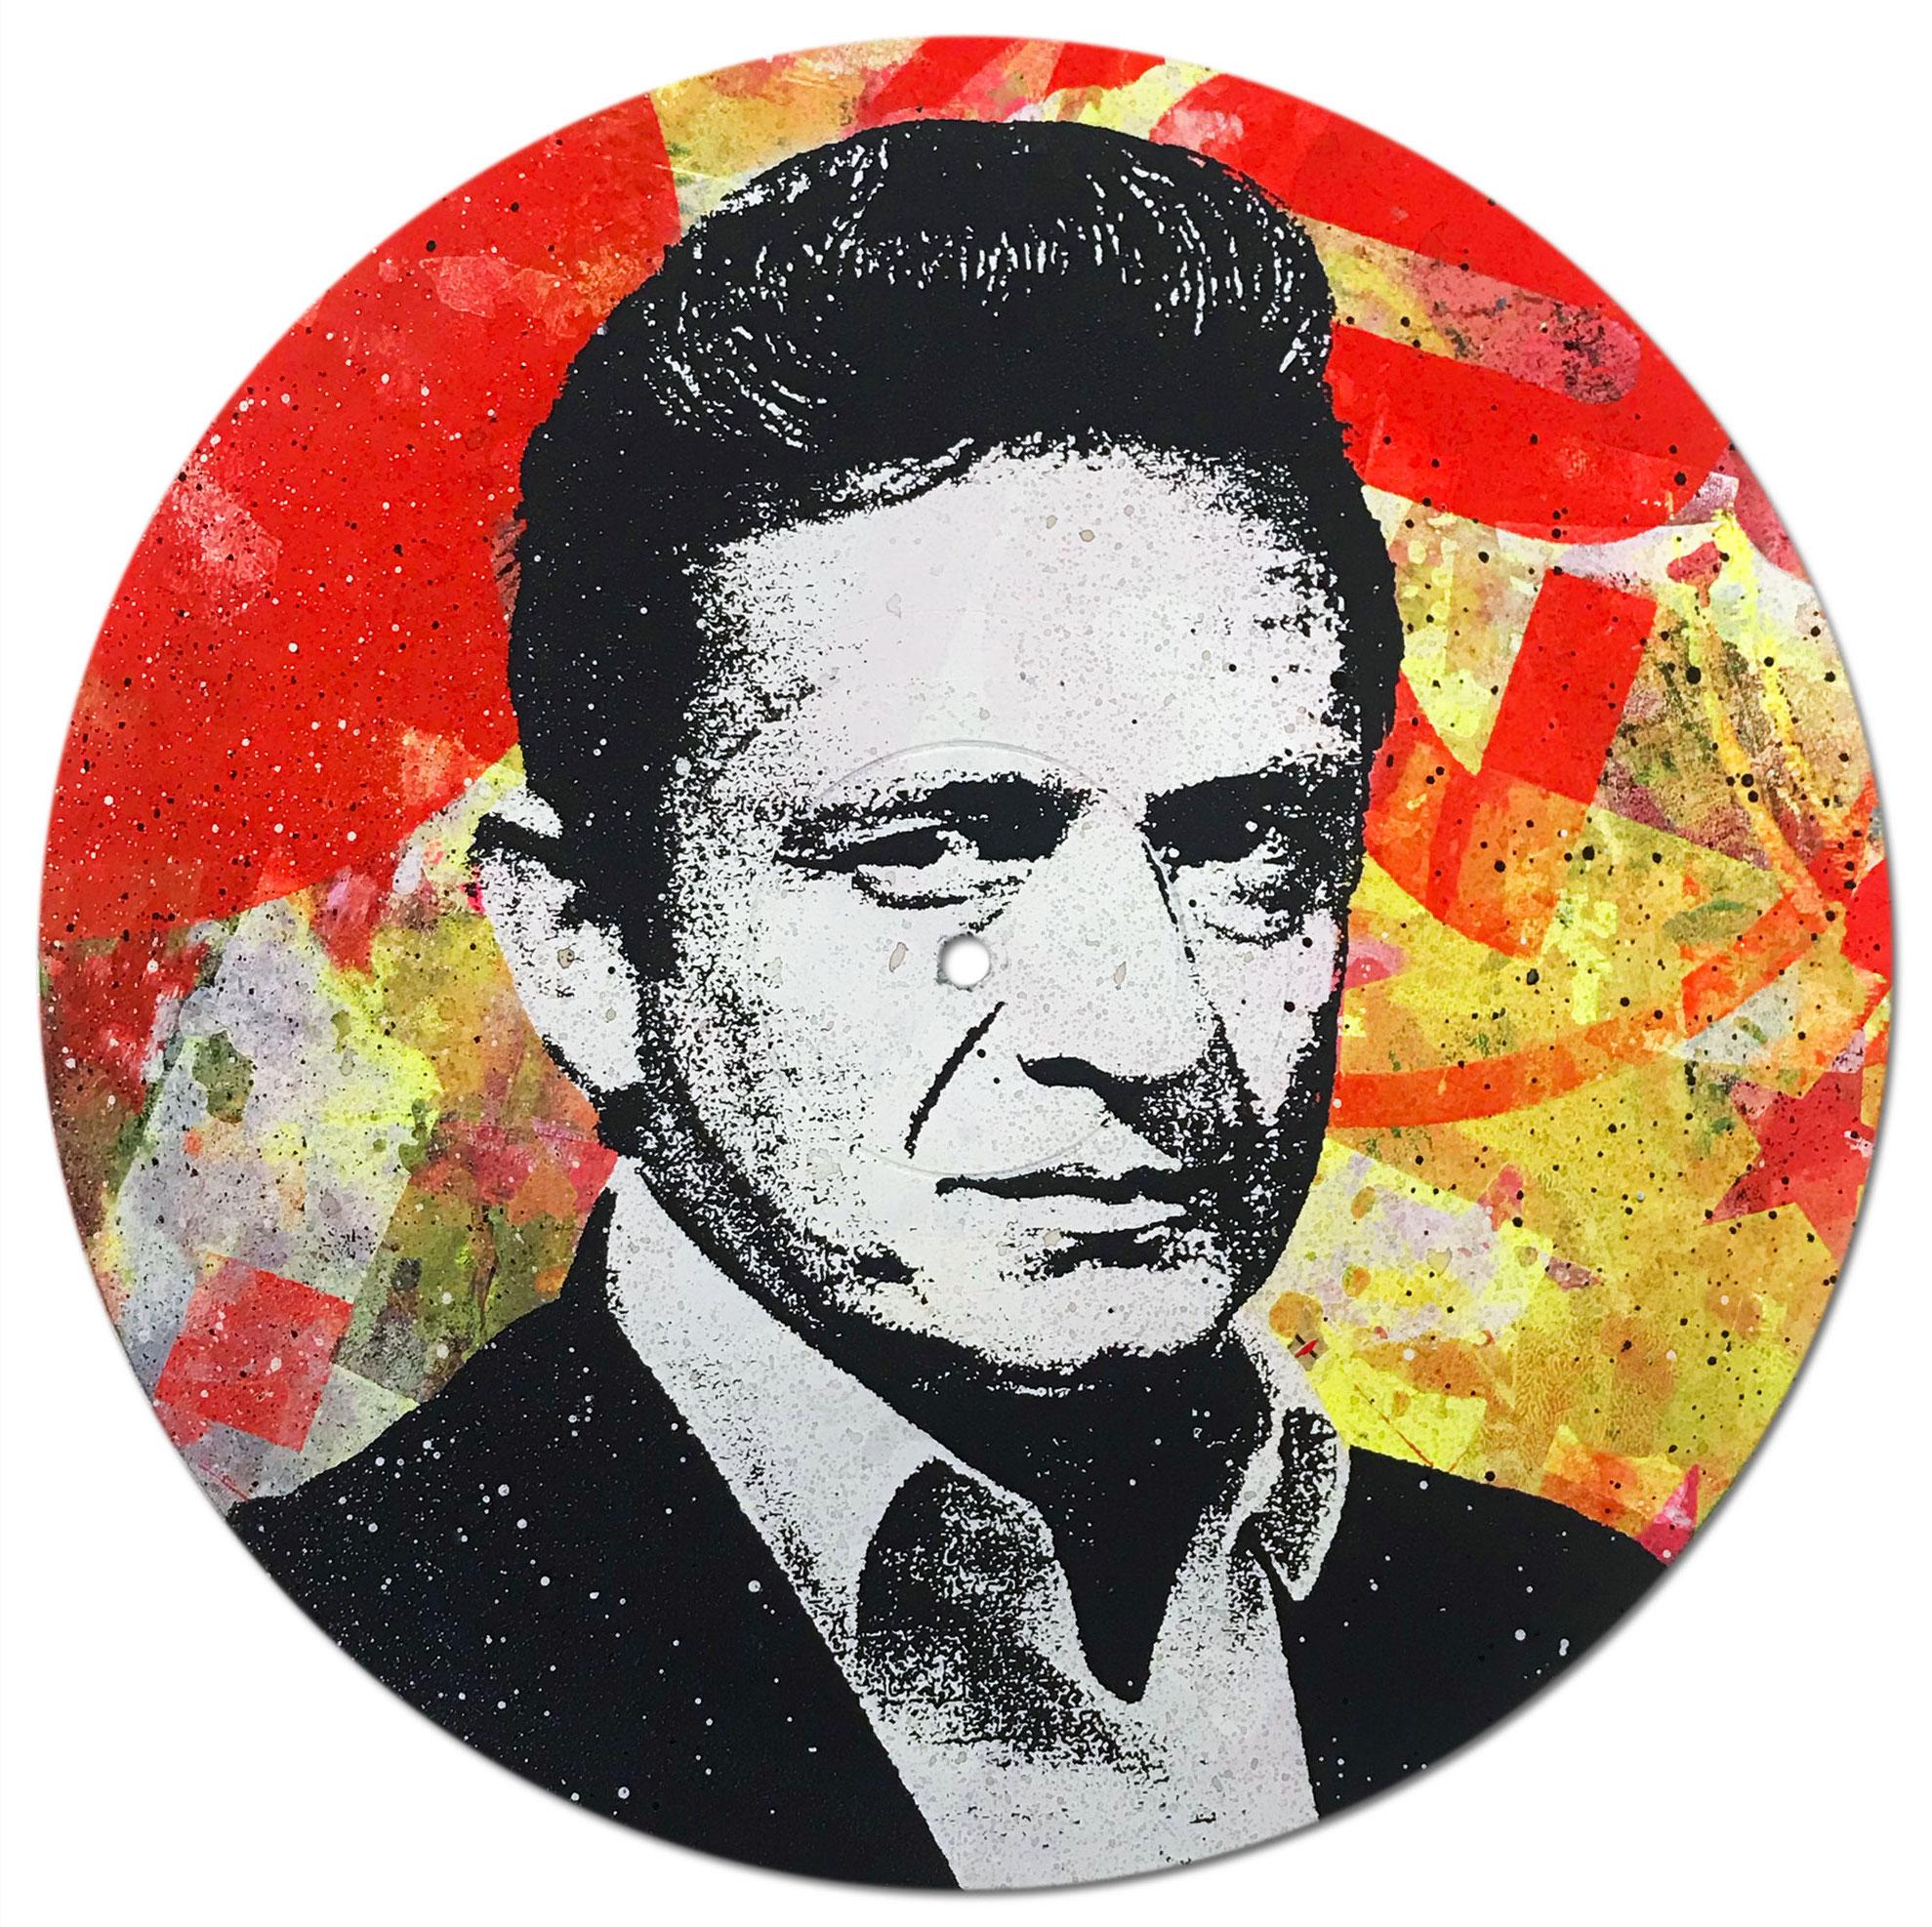 Johnny Cash Vinyl 1-10, Greg Gossel Pop Art LP Record (Singles & Sets Available) For Sale 3